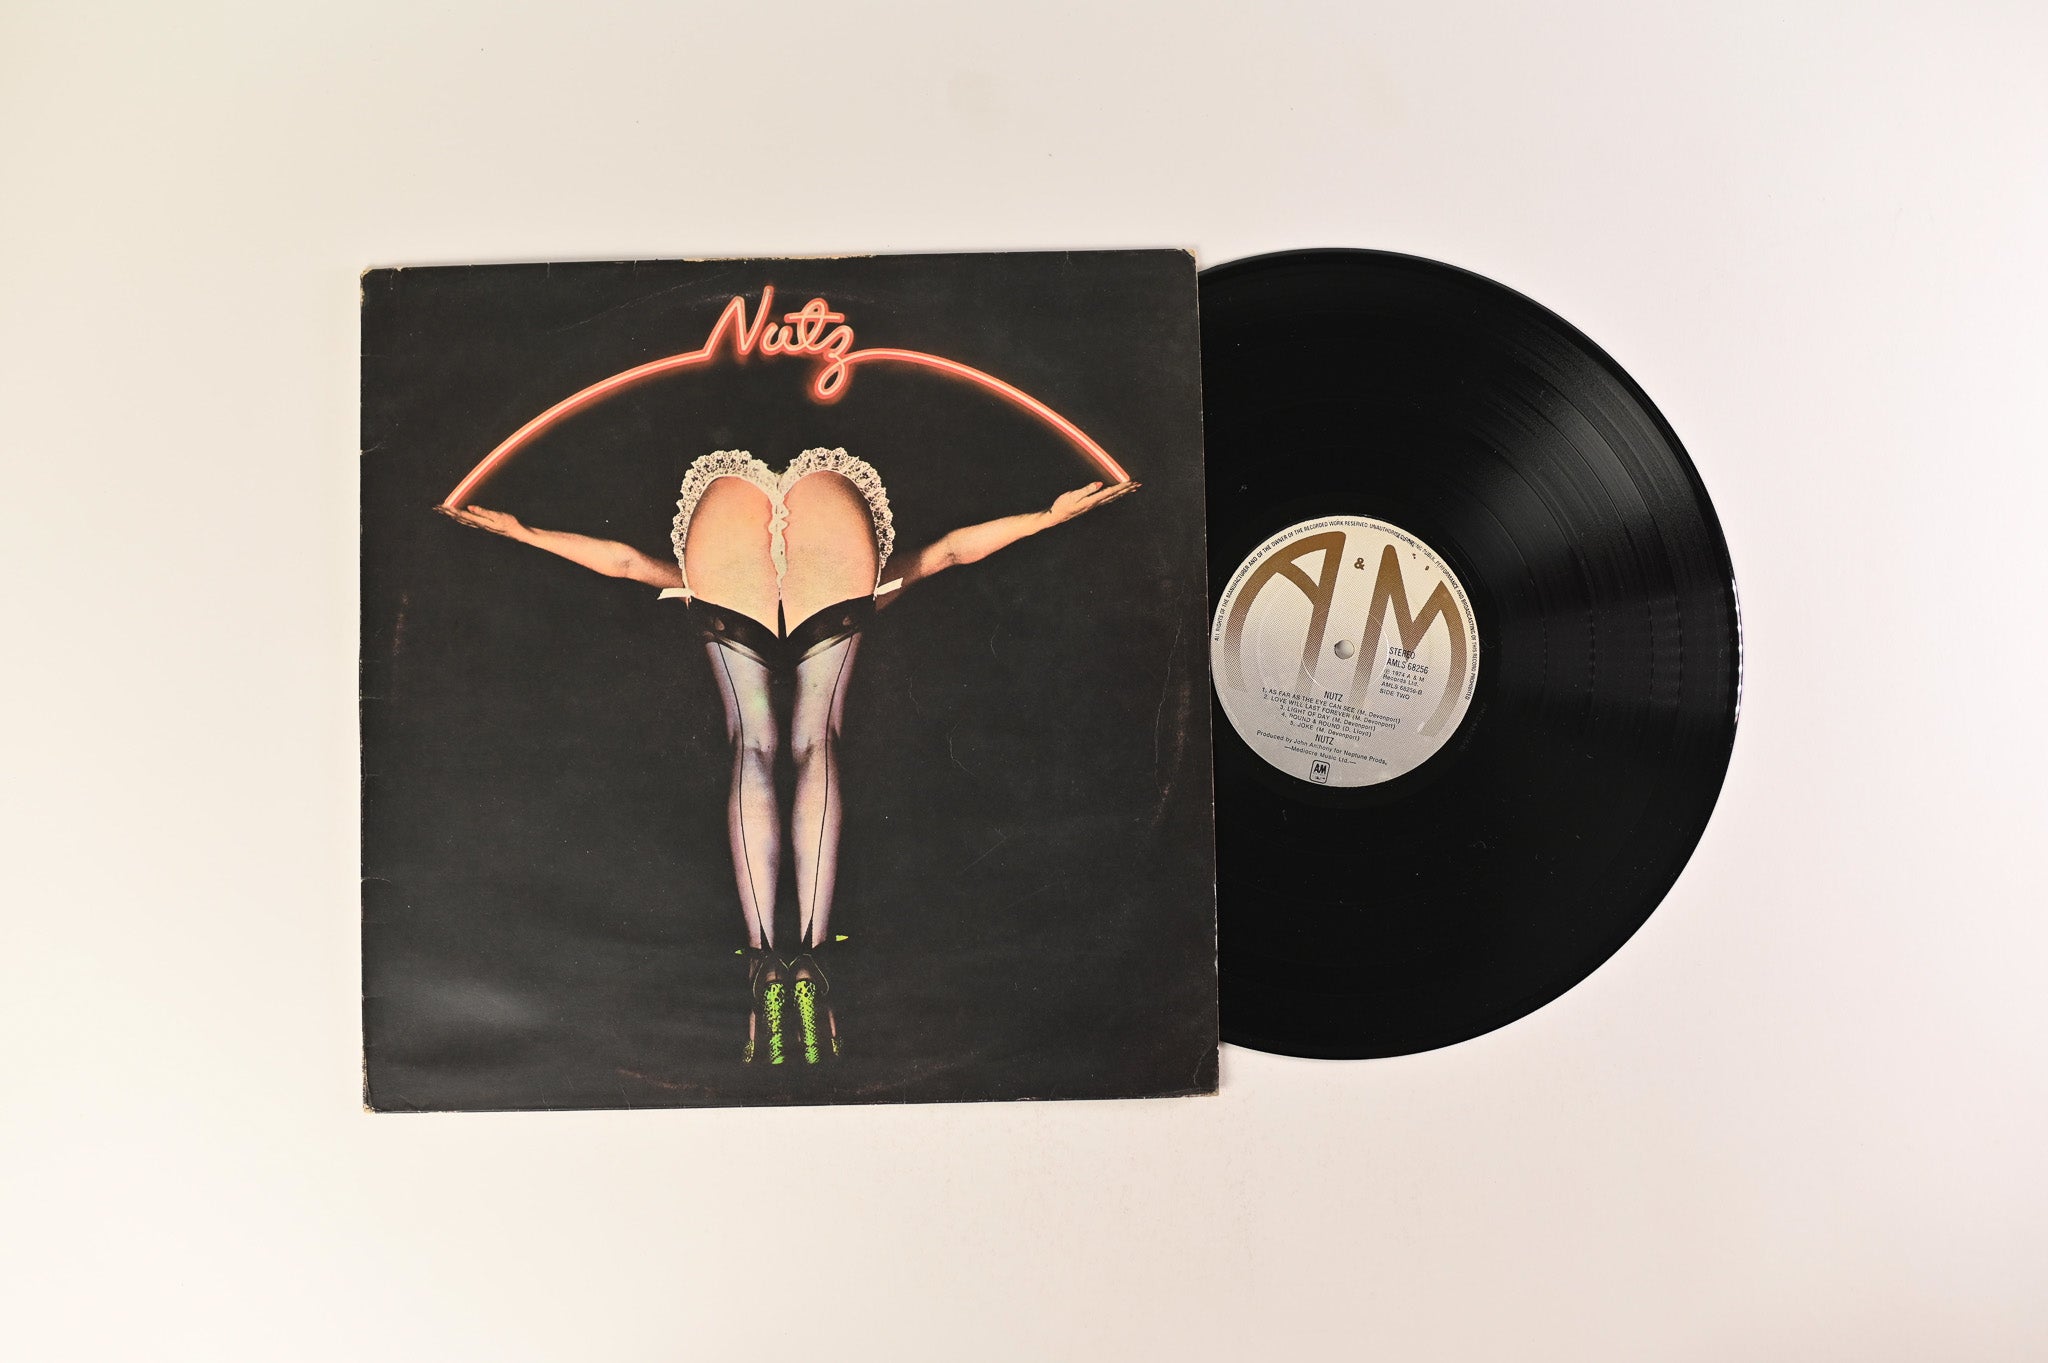 Nutz - Nutz on A&M Records - UK pressing